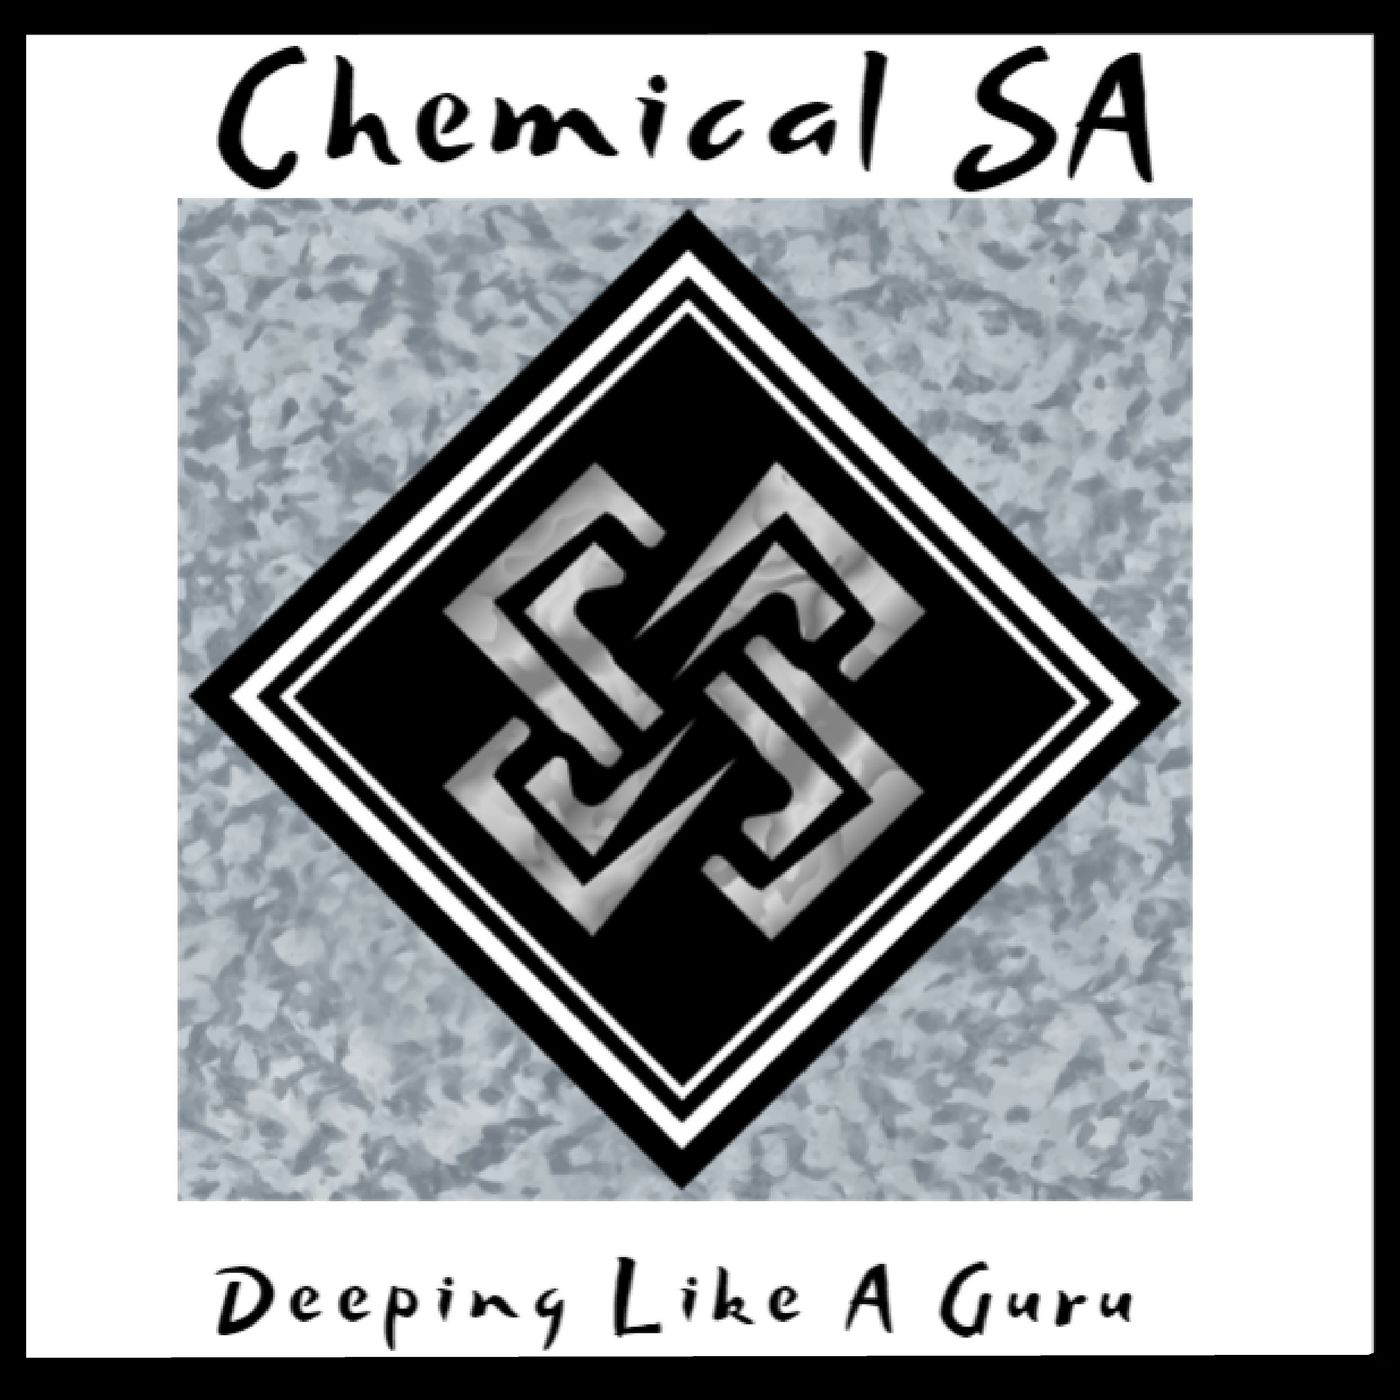 Chemical Sa - Deeping Like a Guru / Chemical SA